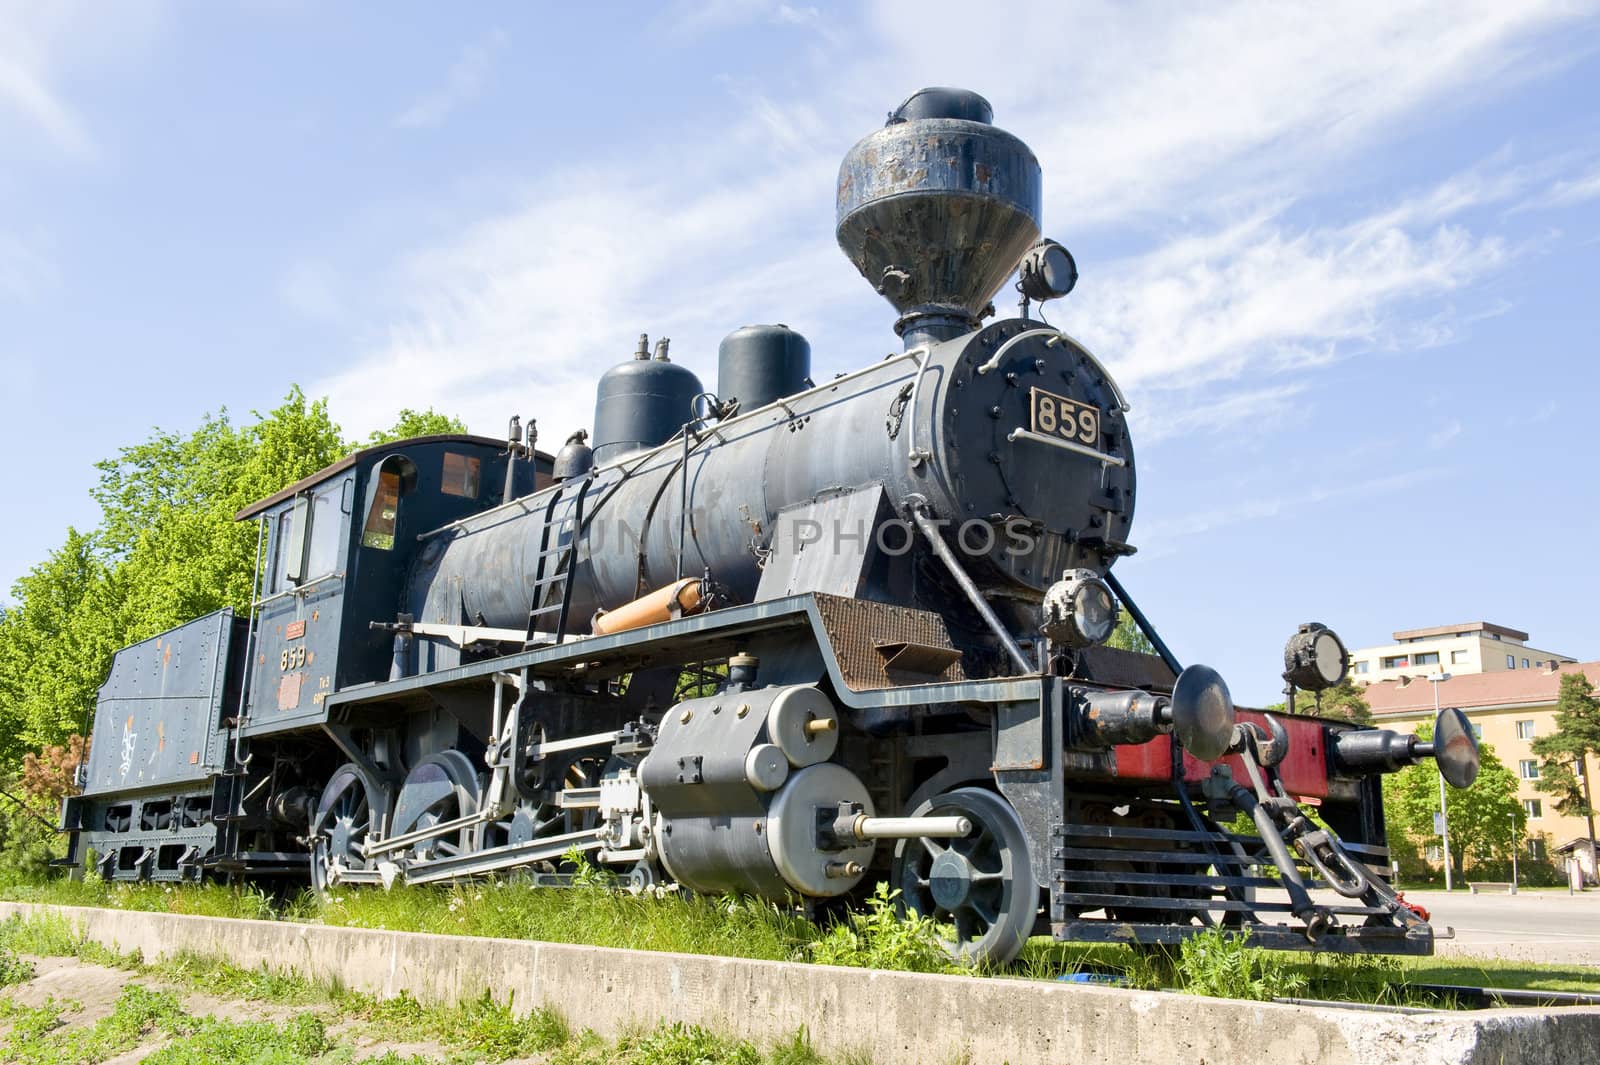 Old steam lokomotive taken in Finland on Kouvola railway station